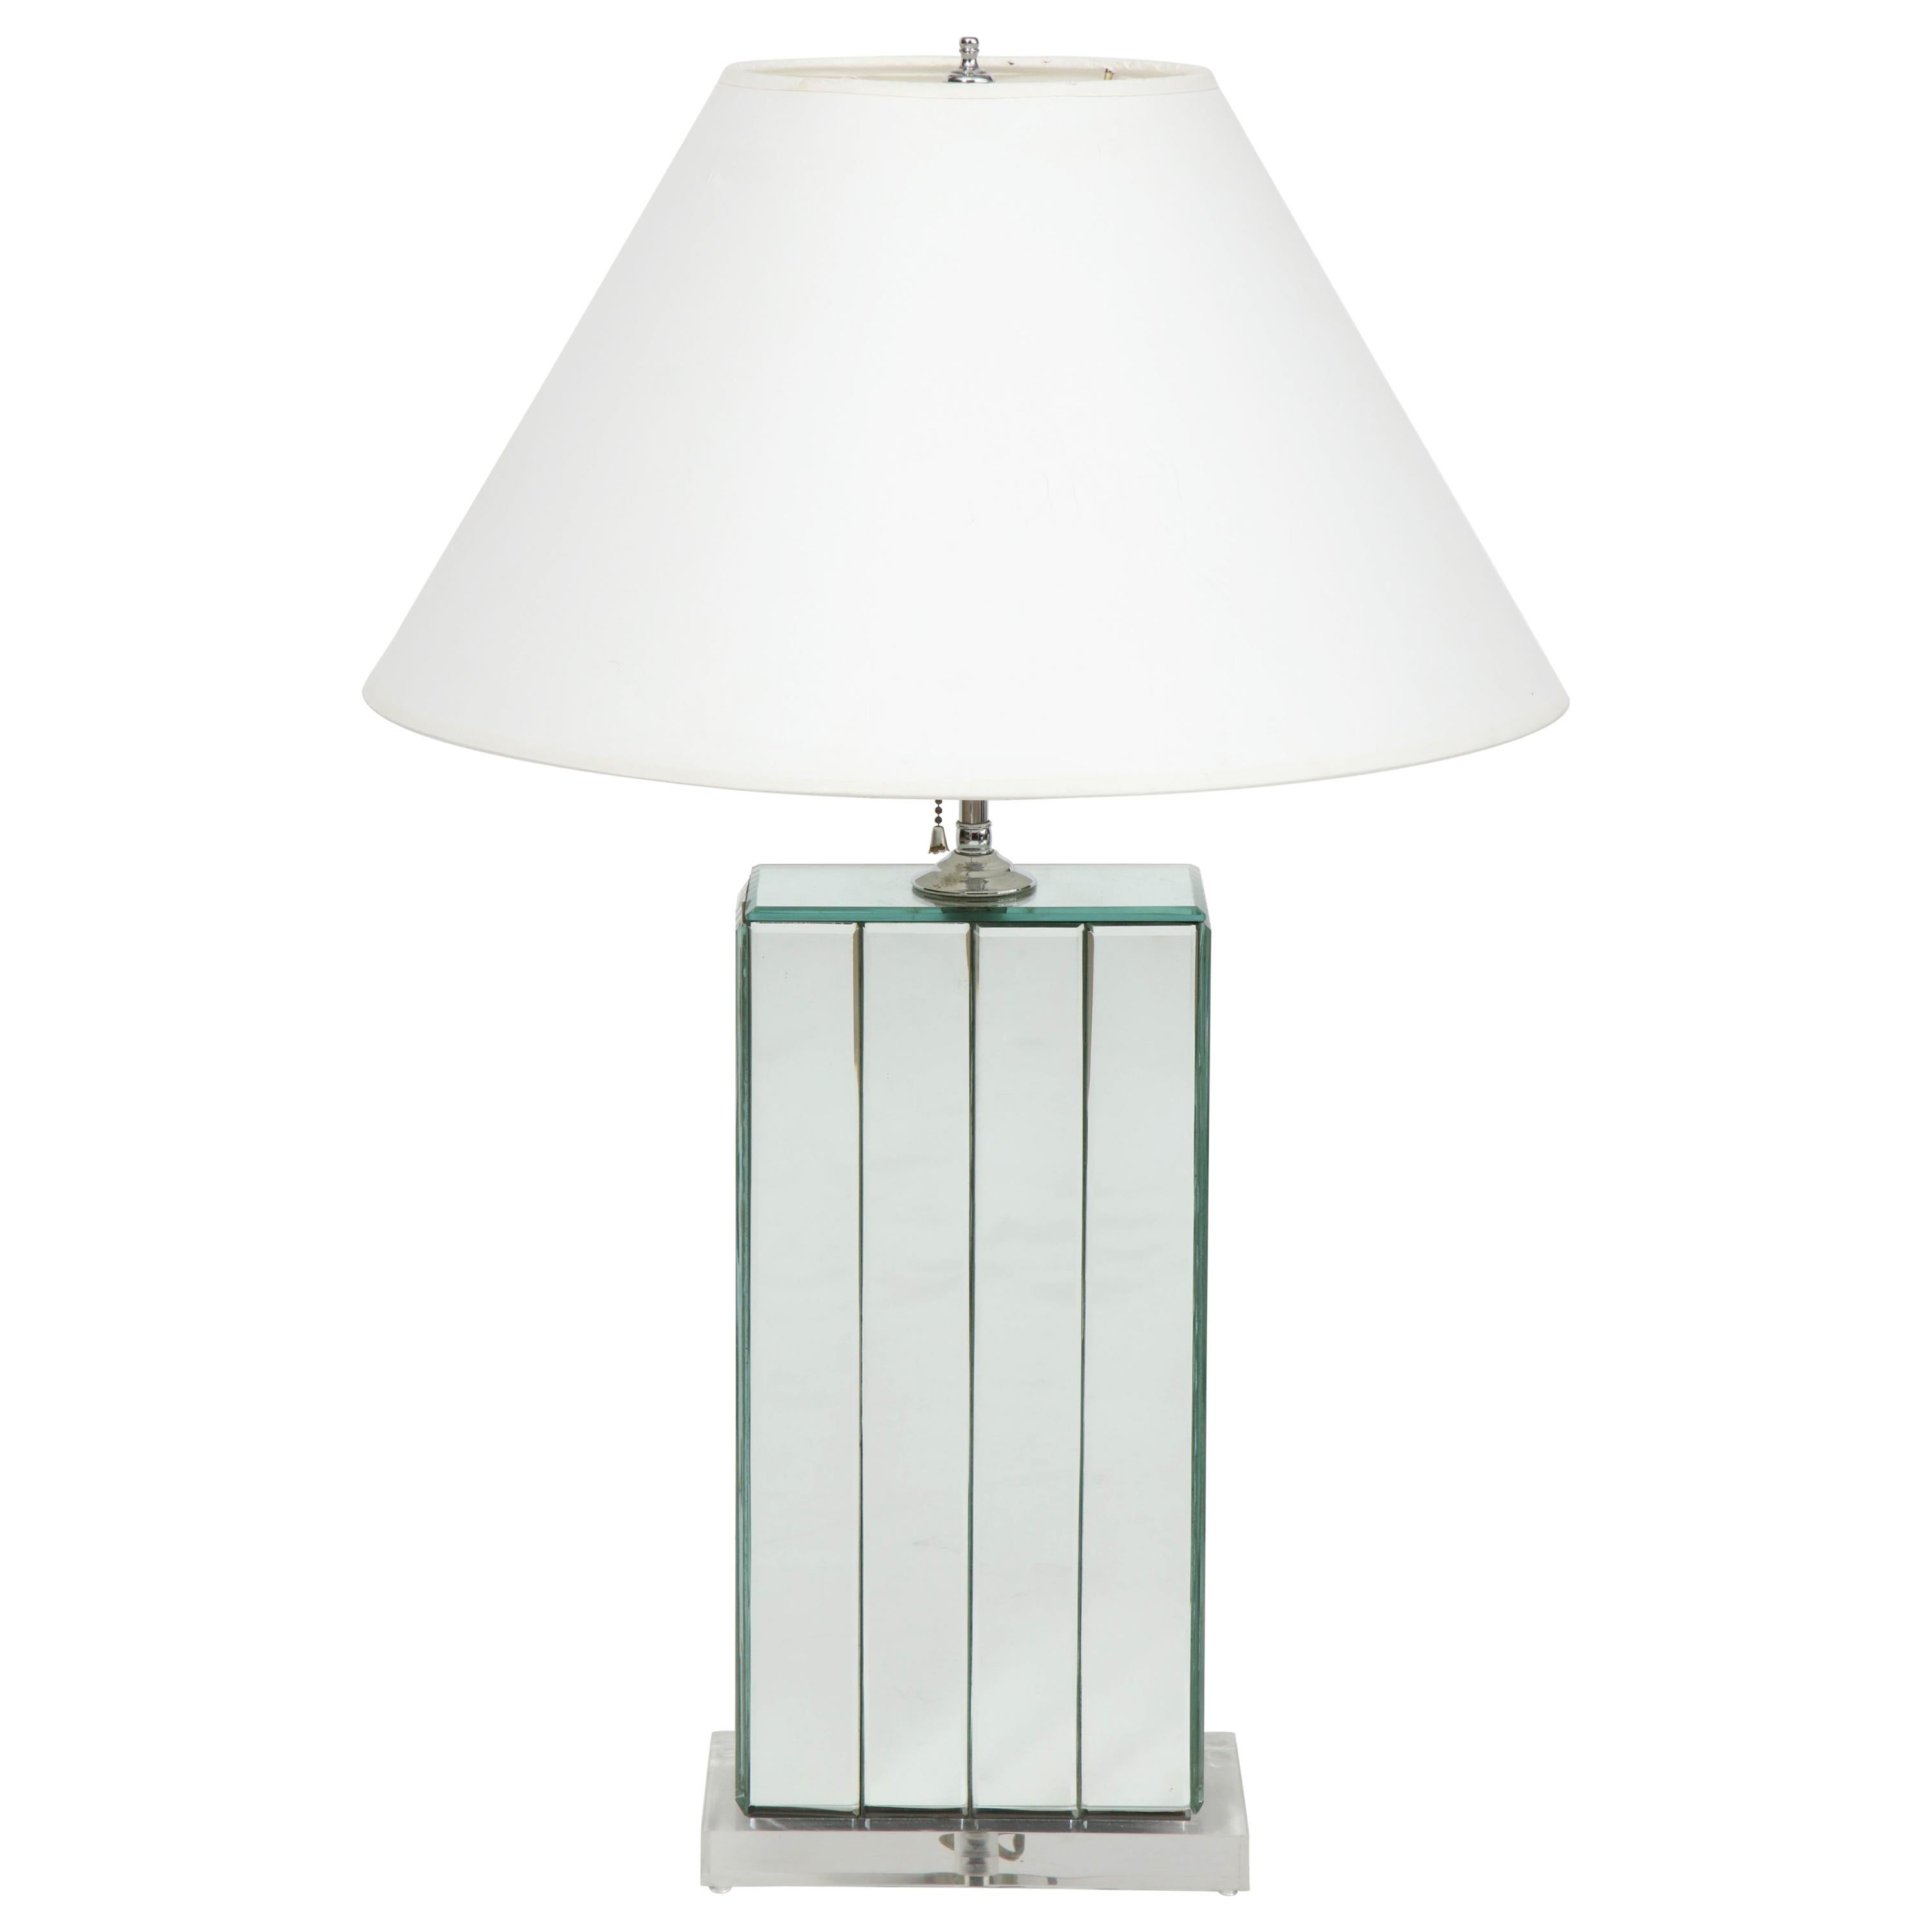 20th Century Modern Mirrored Lamp "Karl Springer" For Sale